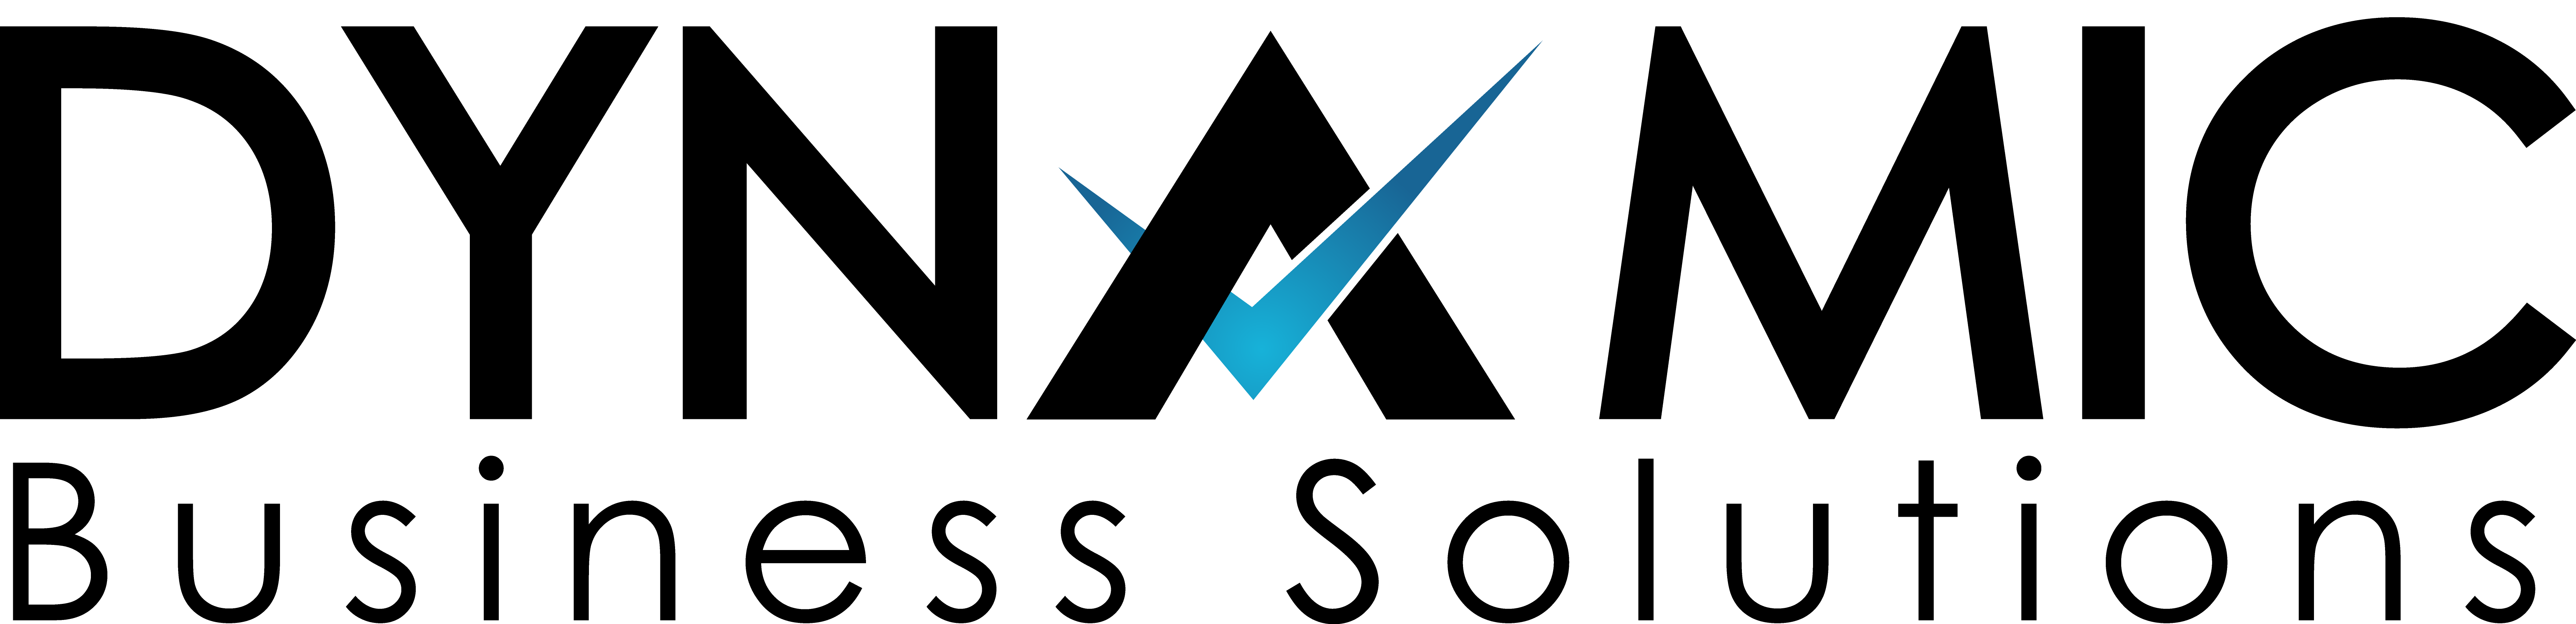 Logo - Dynamics Business Solutions Gmbh (7029x1704)